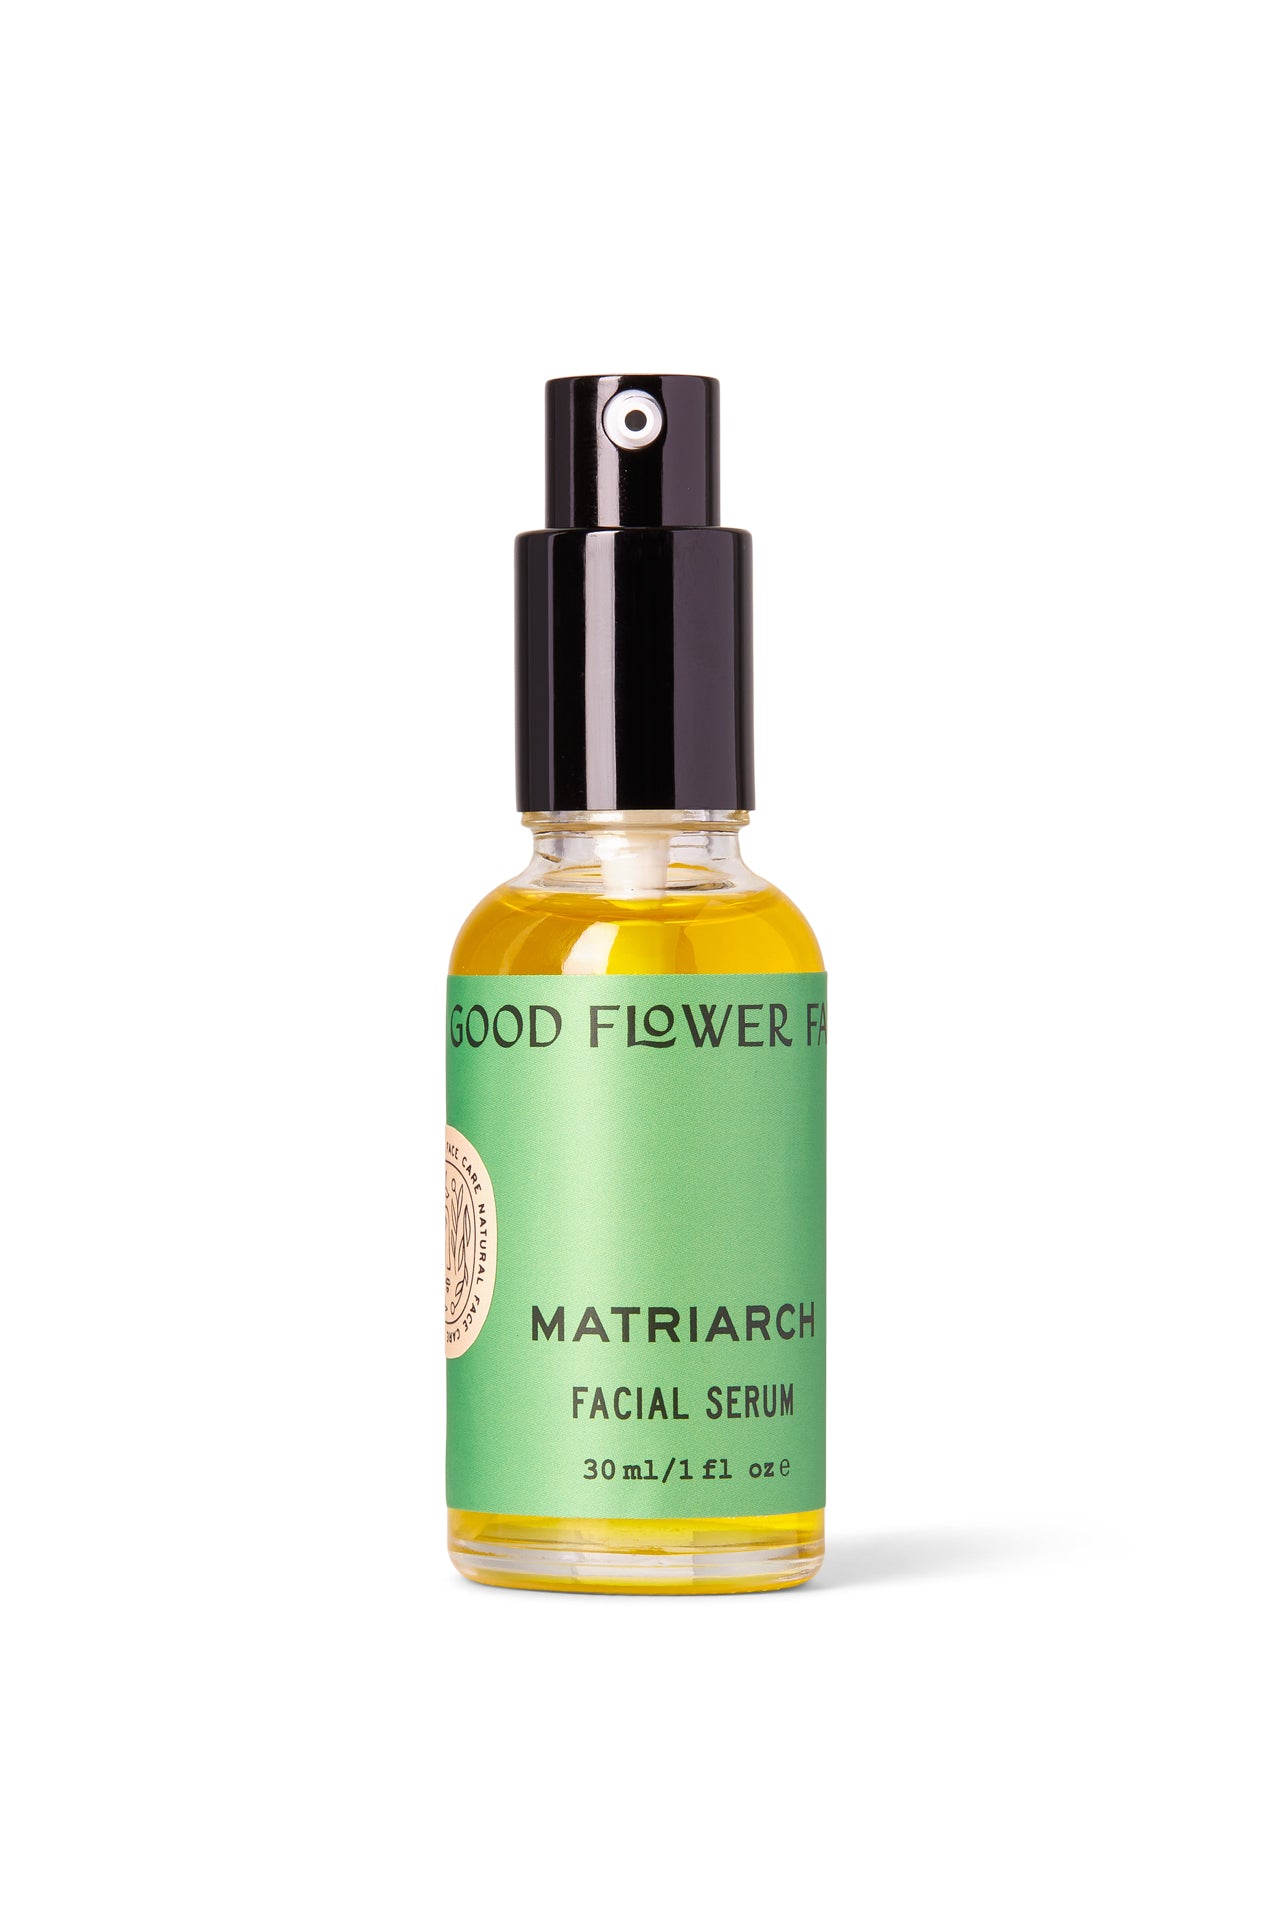 Matriarch Facial Serum: Organic squalane facial oil for mature skin by Good Flower Farm